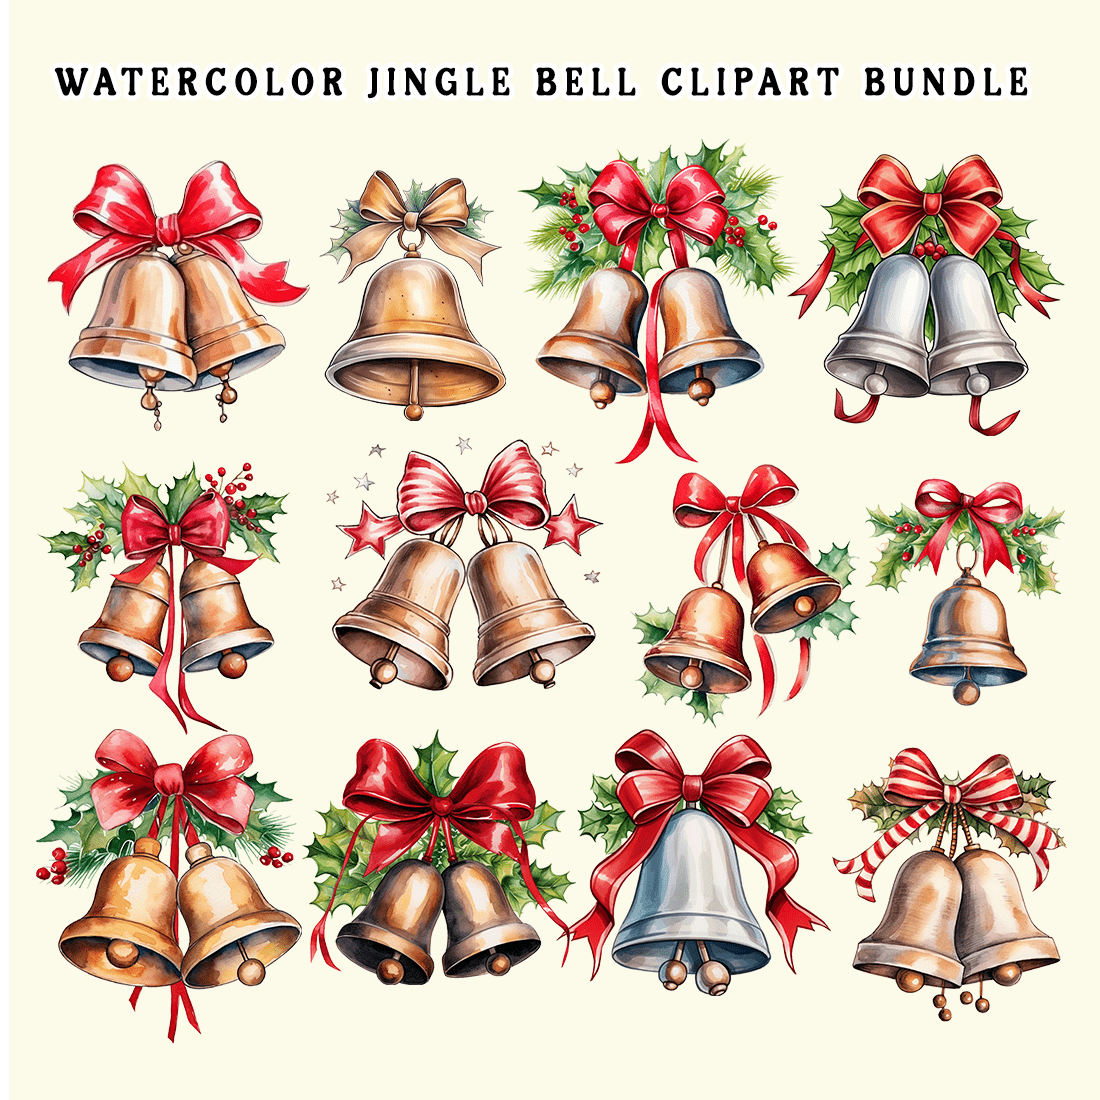 Watercolor Jingle Bell Clipart Bundle preview image.